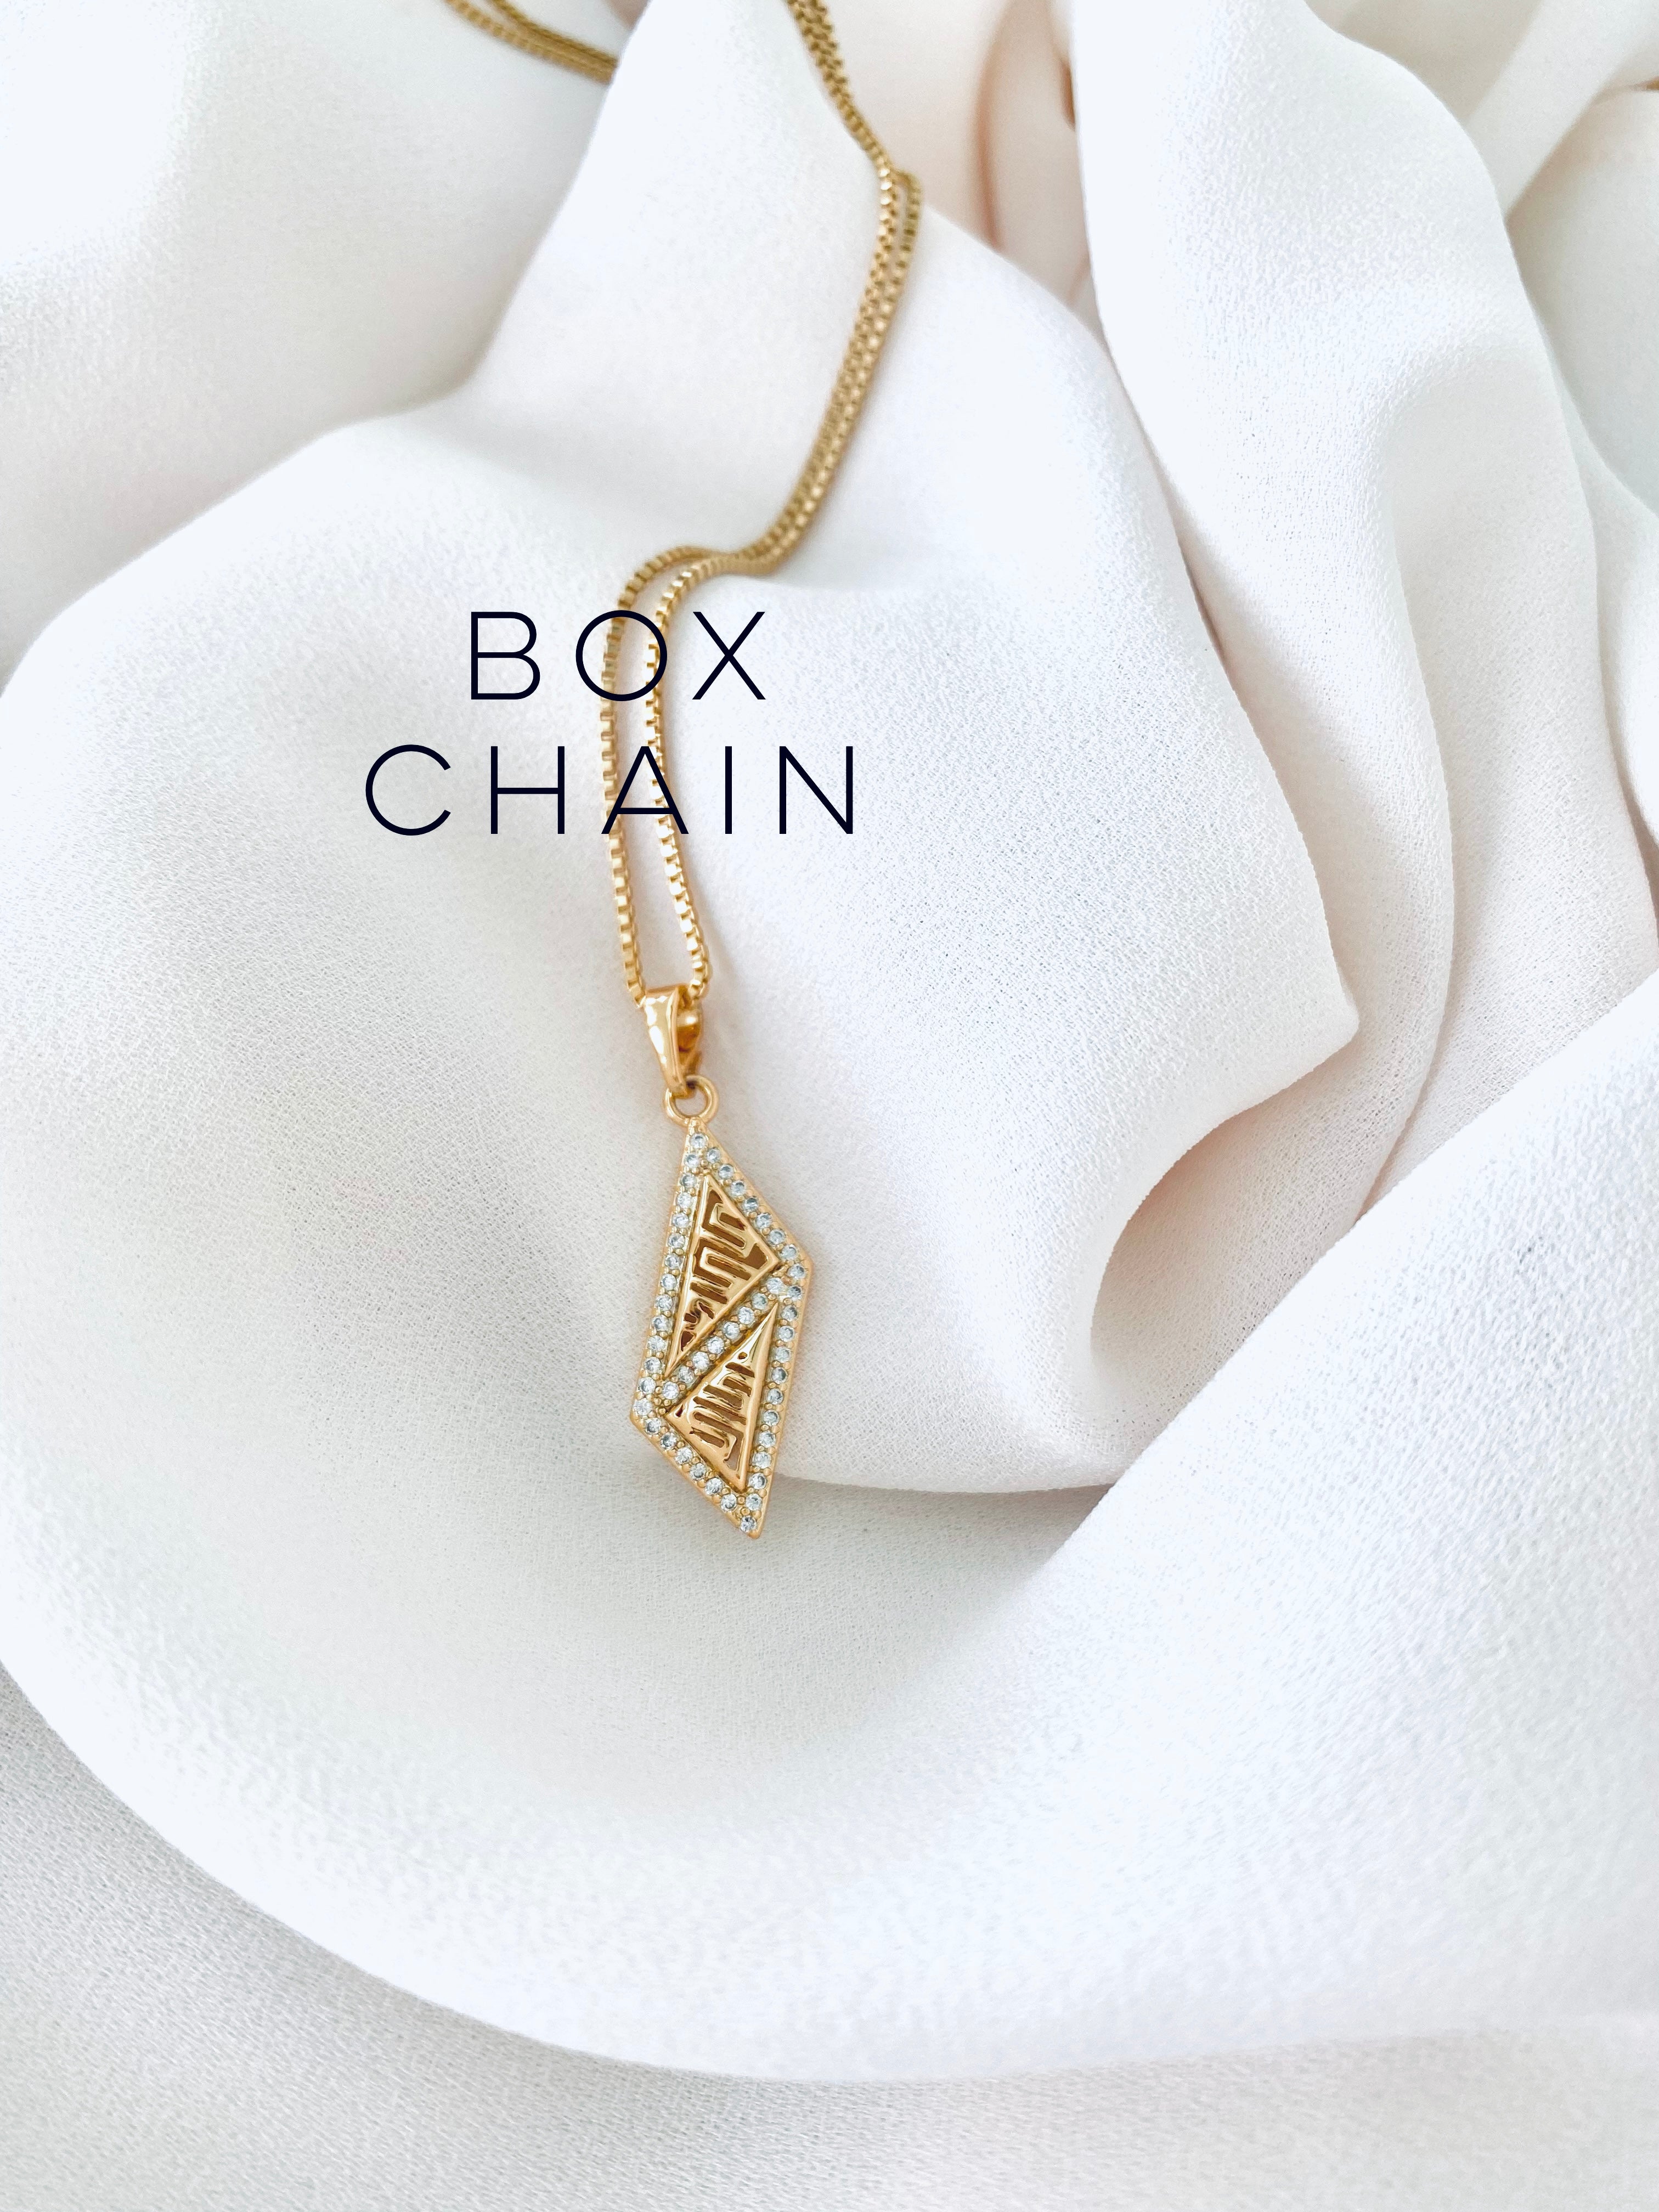 Gold Filled Vintage Style Greek Key Pendant Necklace - CZ Stones